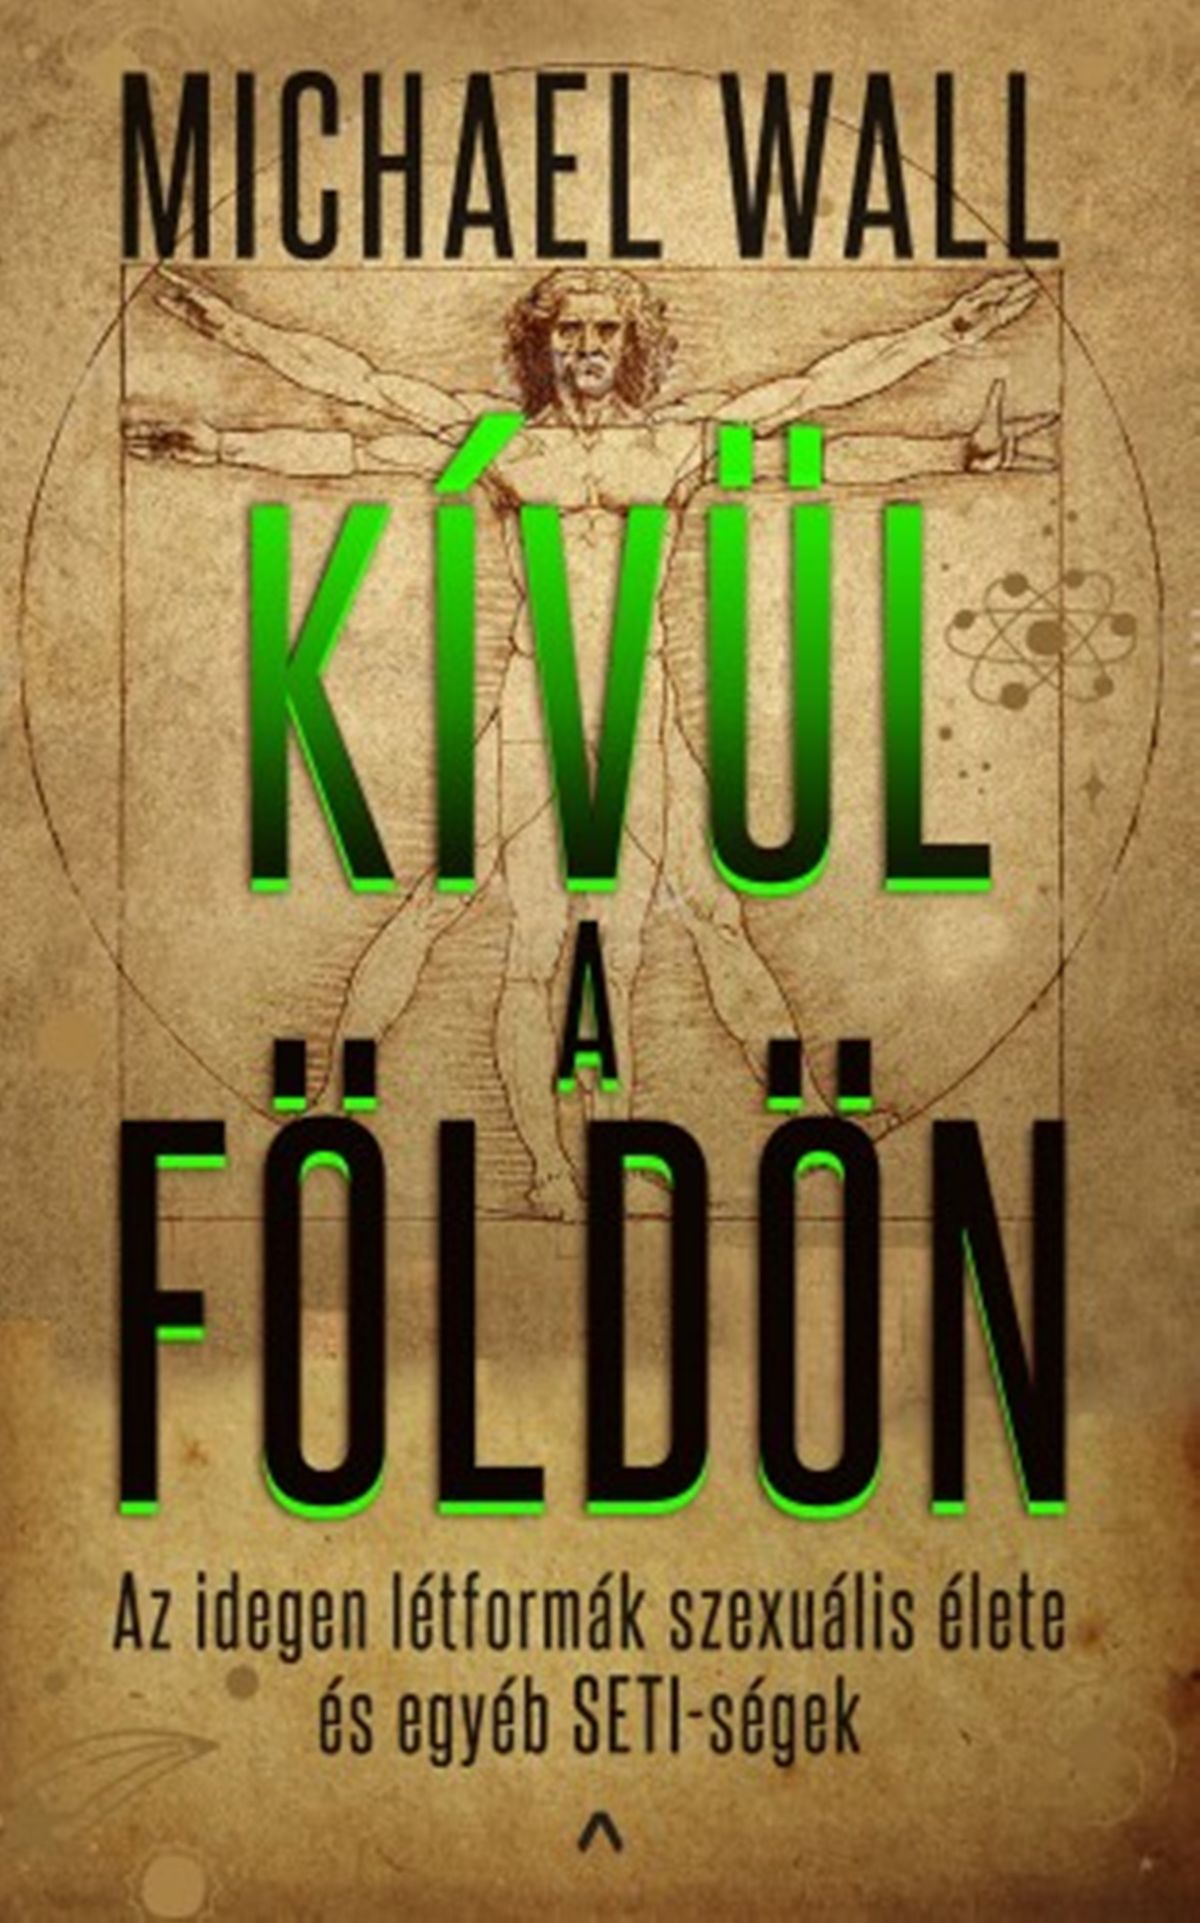 kivul-a-foldon-1.jpg